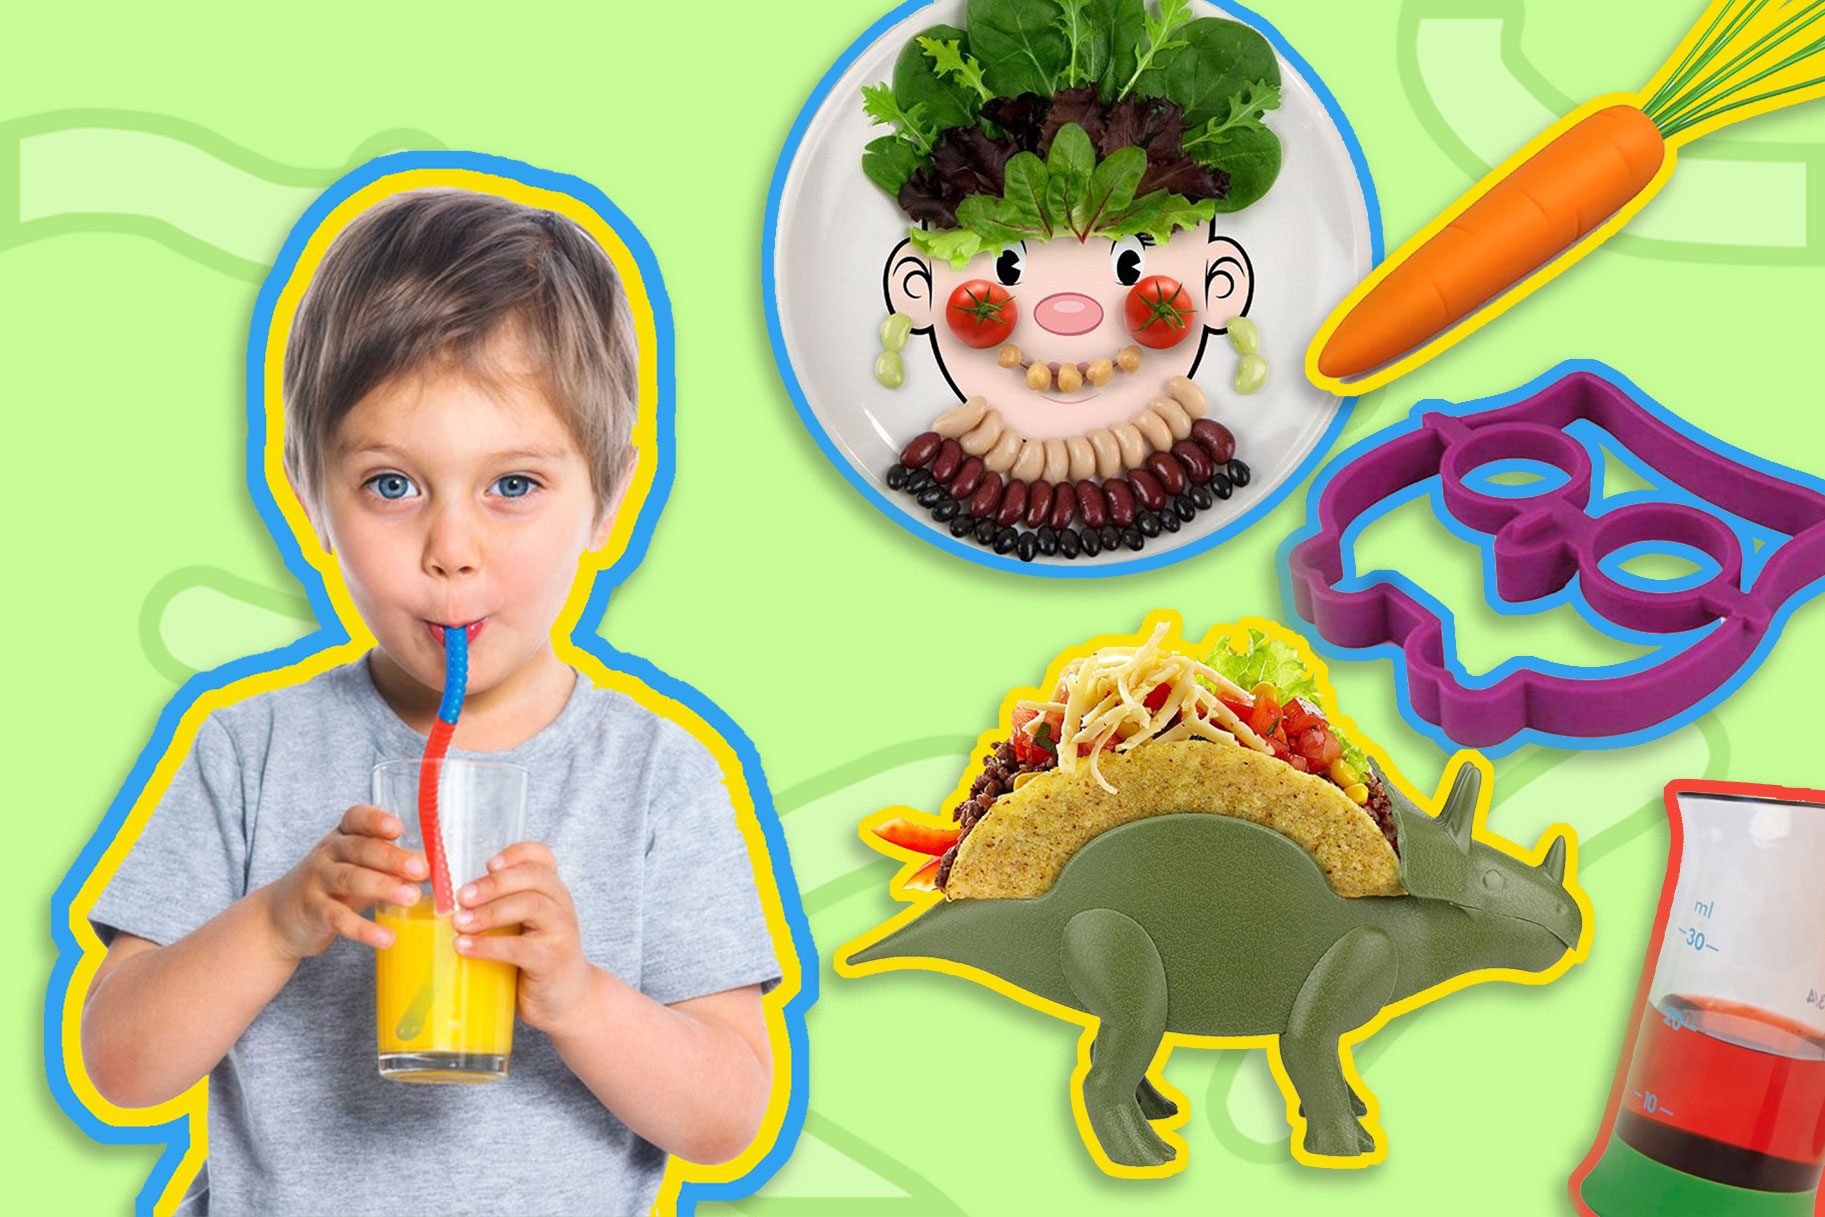 Fun Mealtime Gadgets to Get Kids Eating